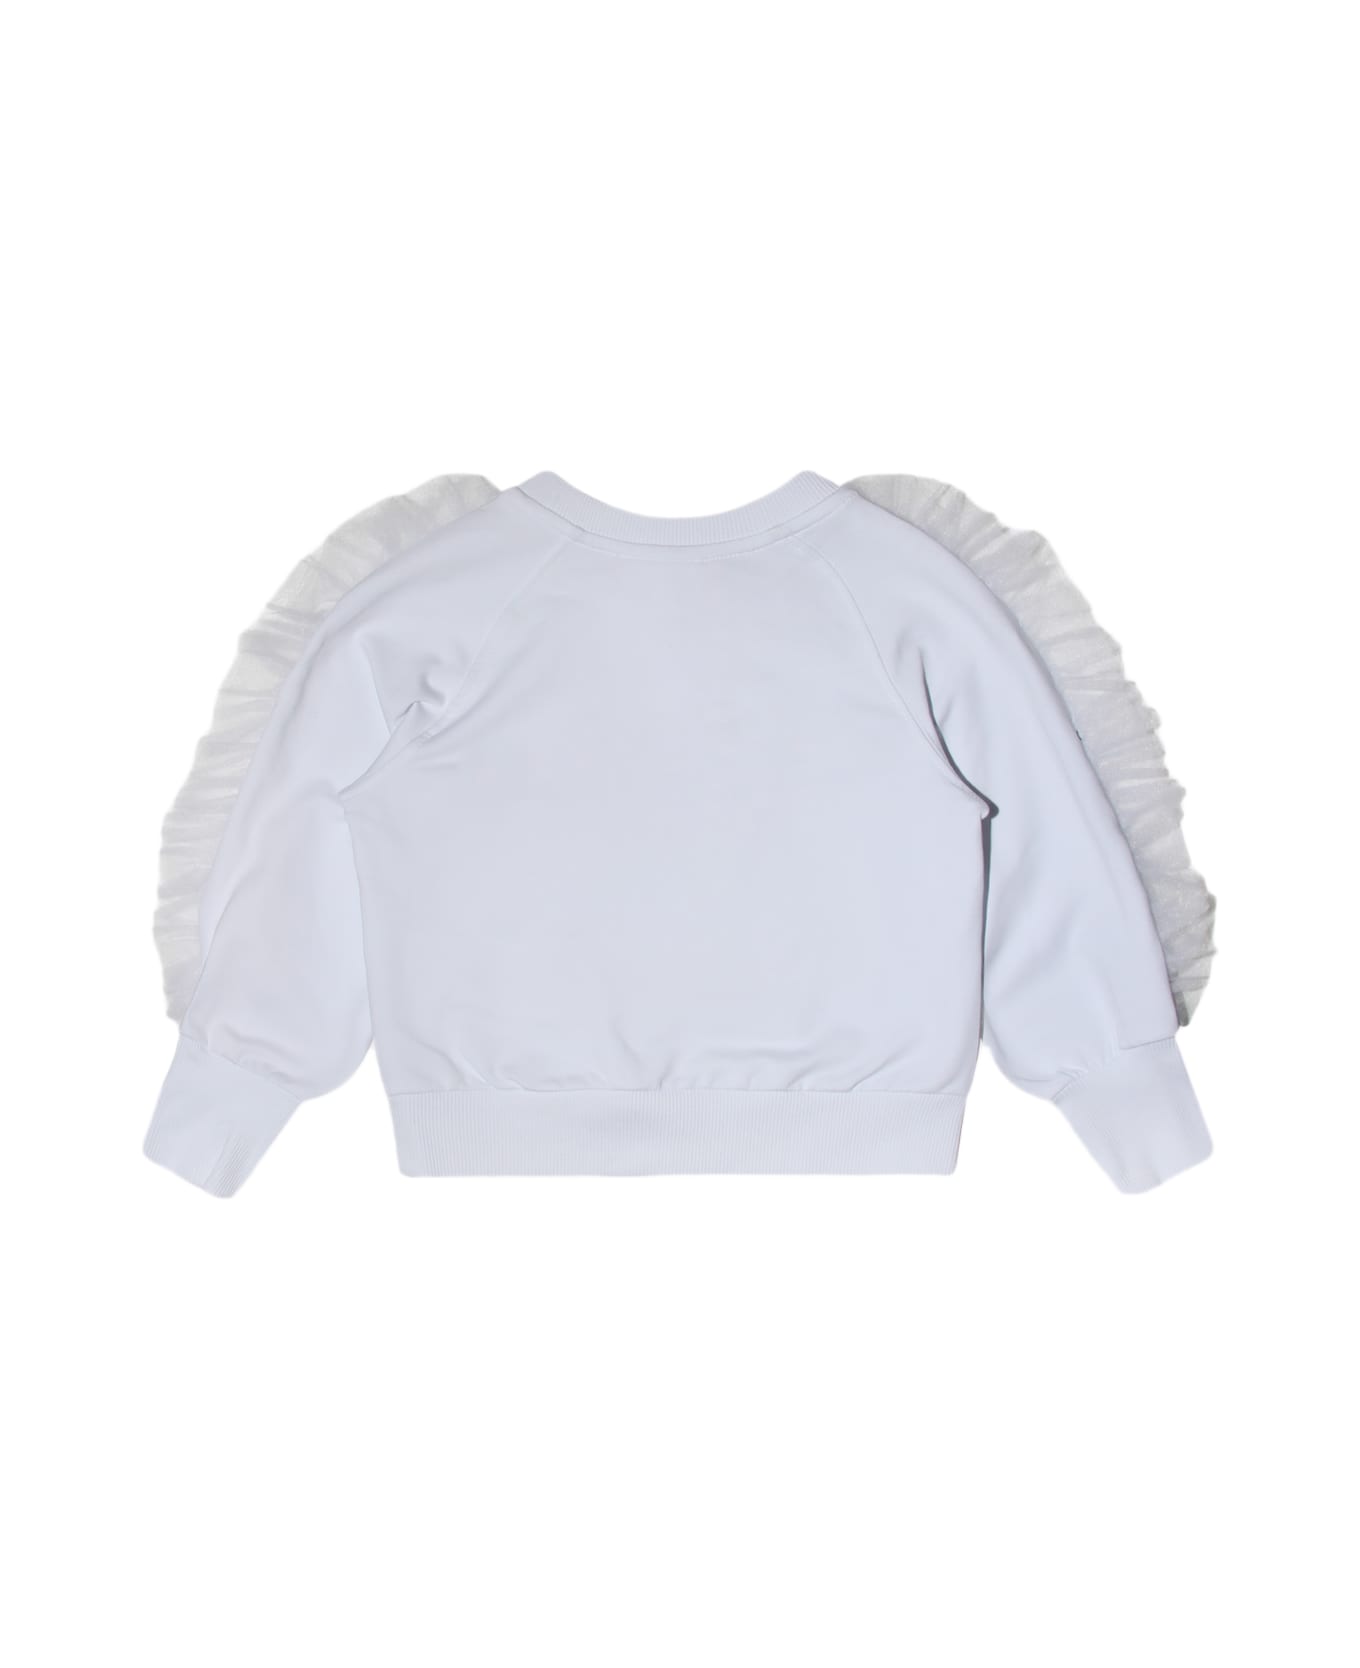 Monnalisa White Cotton Sweatshirt - White